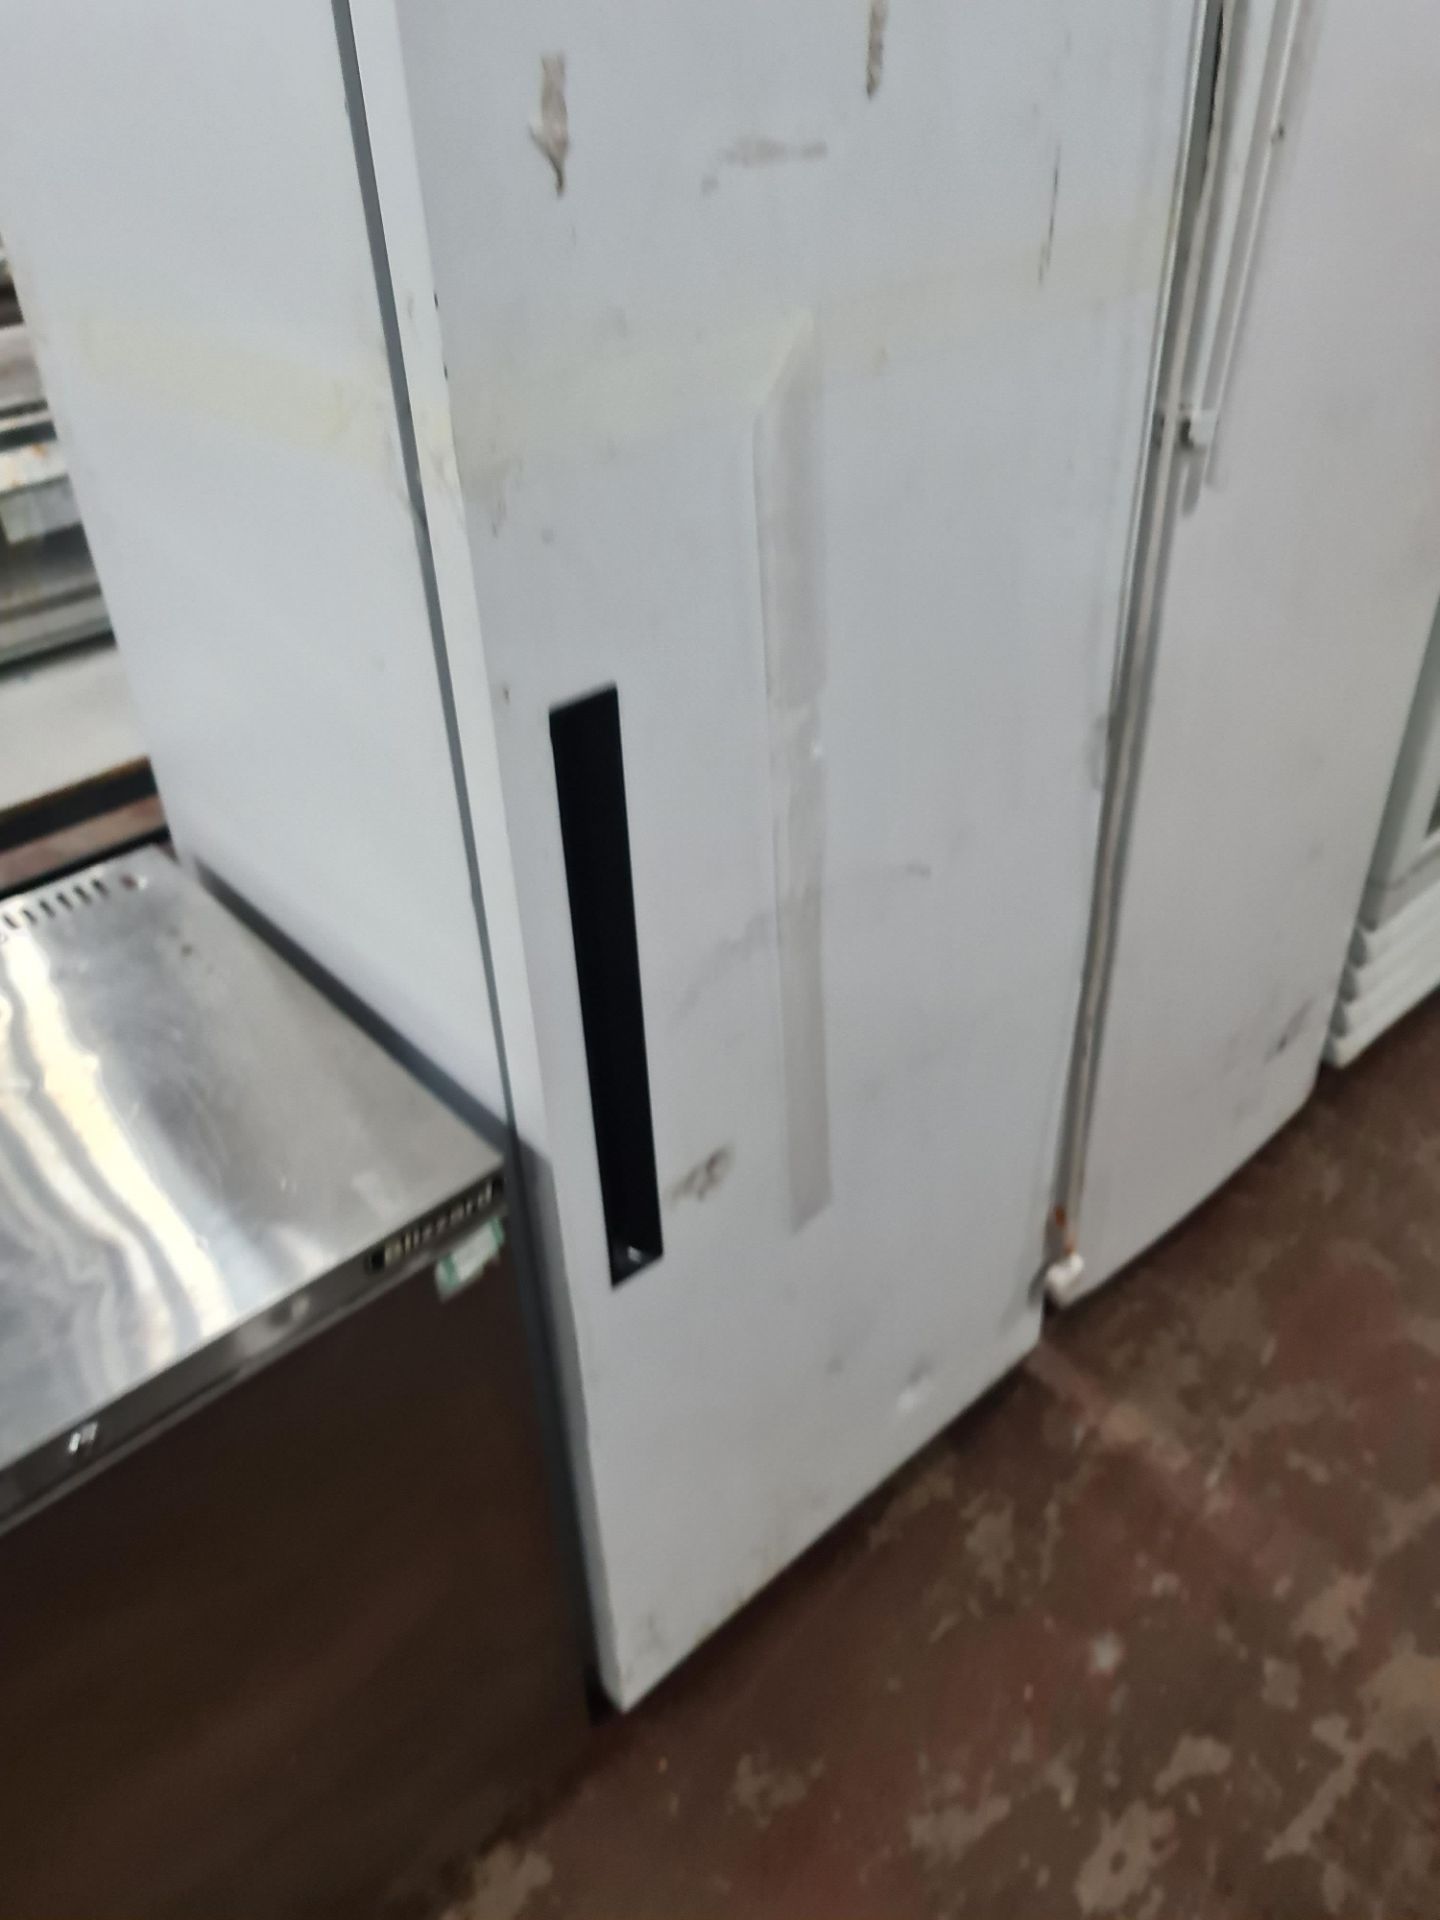 Williams tall fridge, model HA400WA - Image 2 of 9